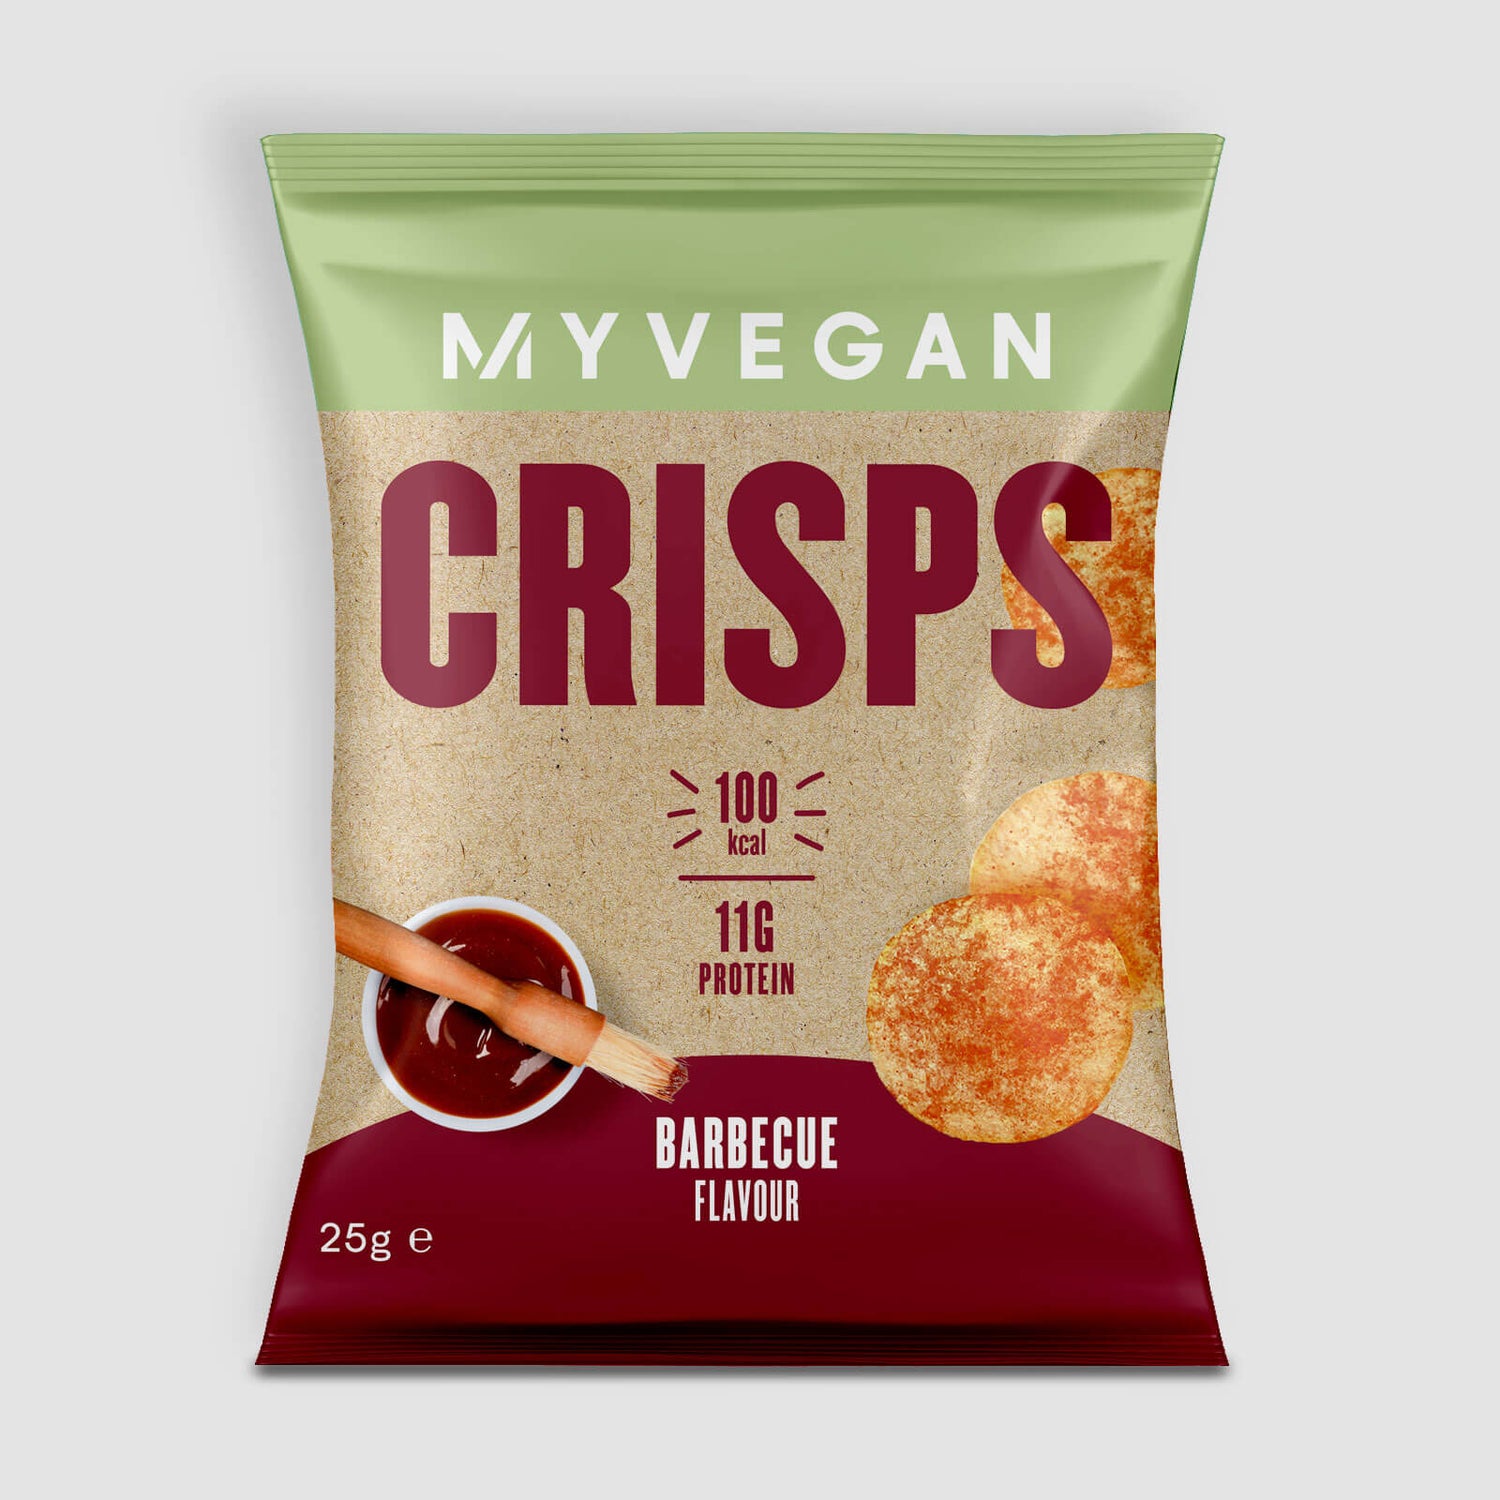 Myvegan Protein Crisps (Sample) - 25g - Barbecue